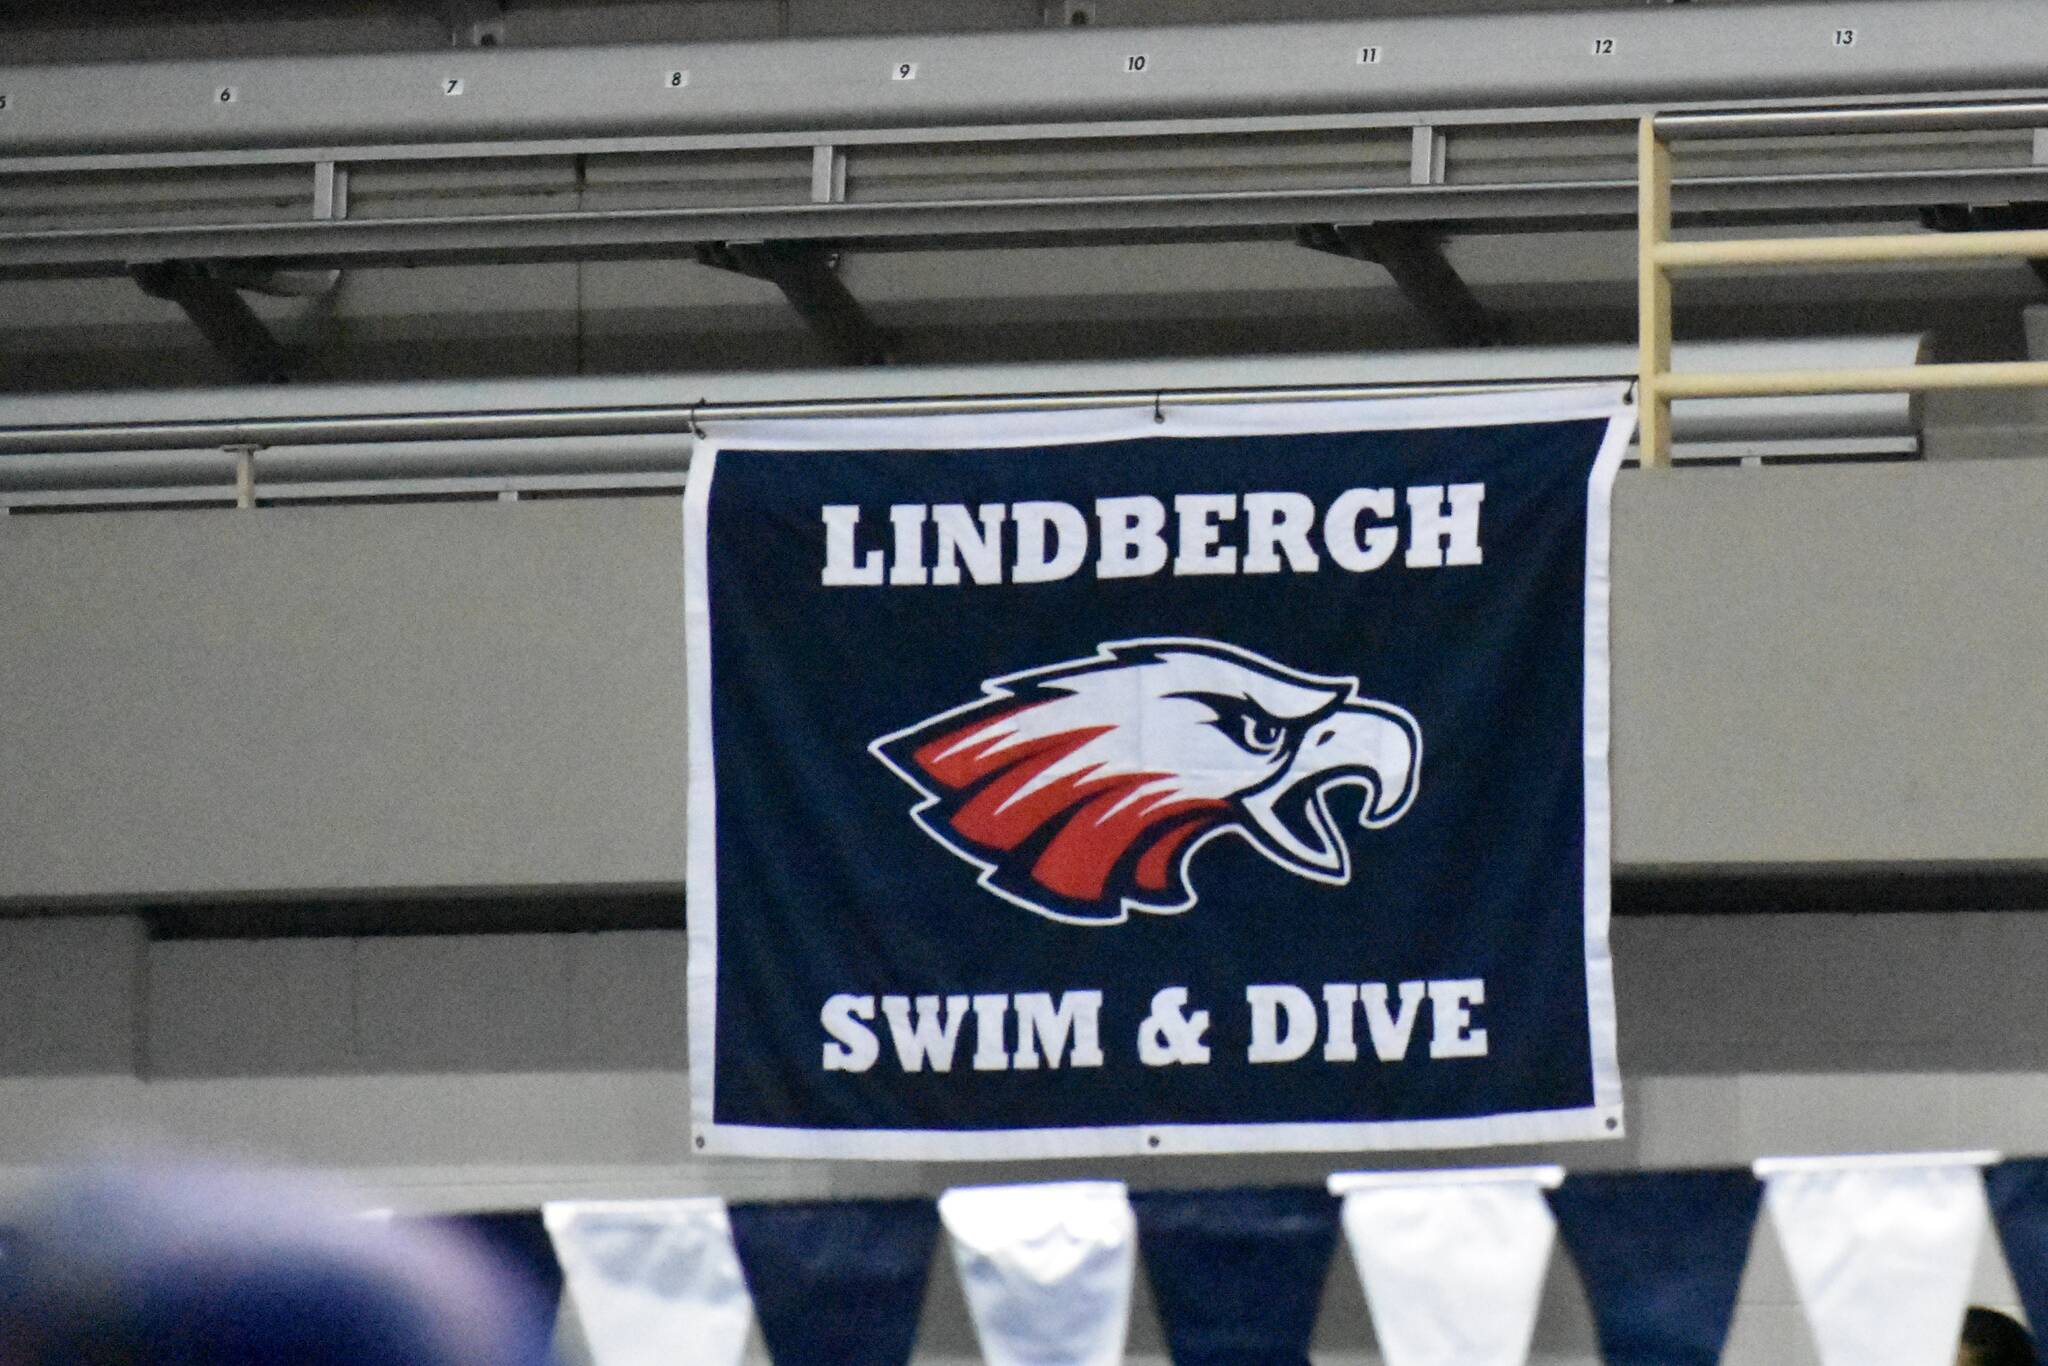 Lindbergh representing at the King County Aquatic Center